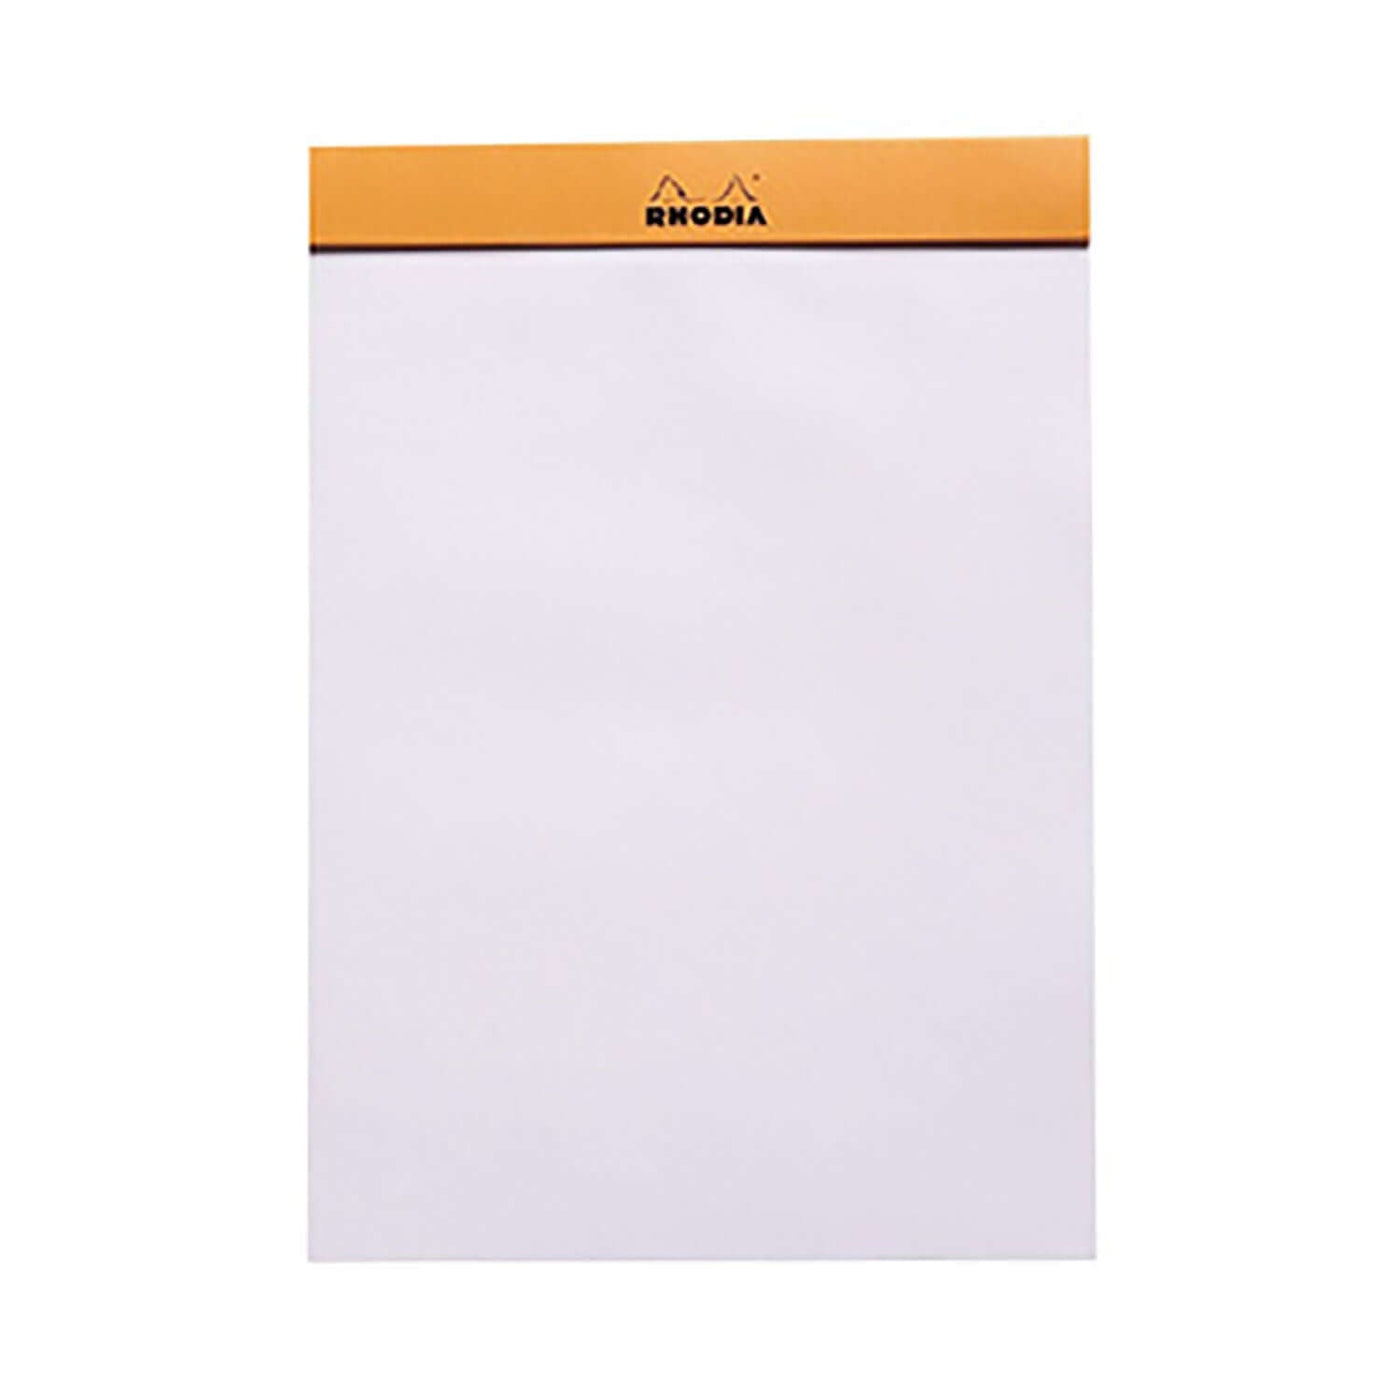 Rhodia Basics Notepad, Orange - Top Stapled 16